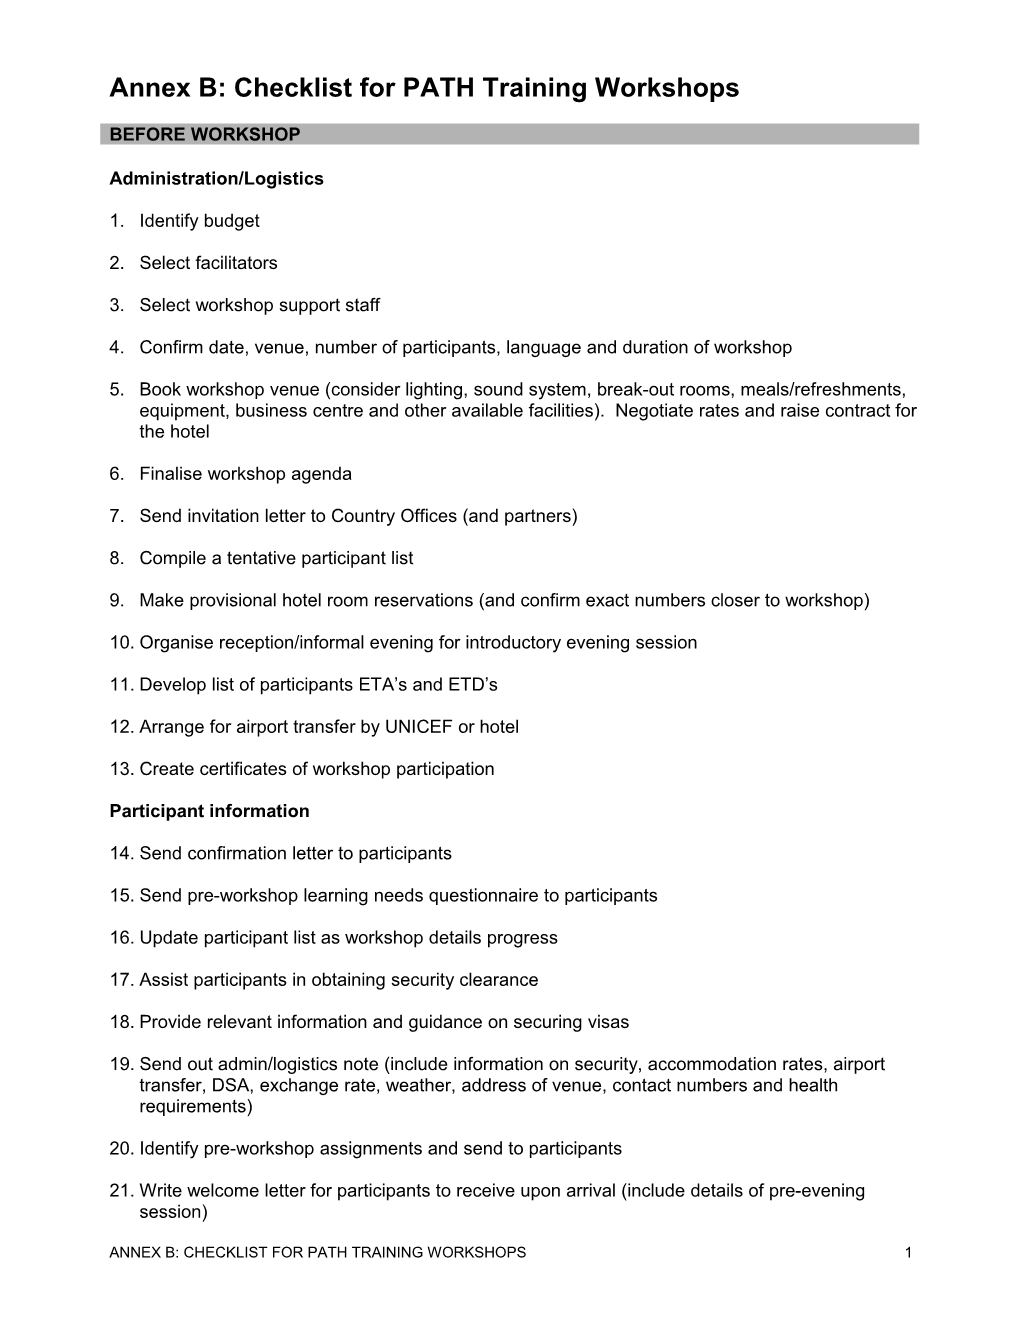 Annex A: Checklist for PATH Training Workshops